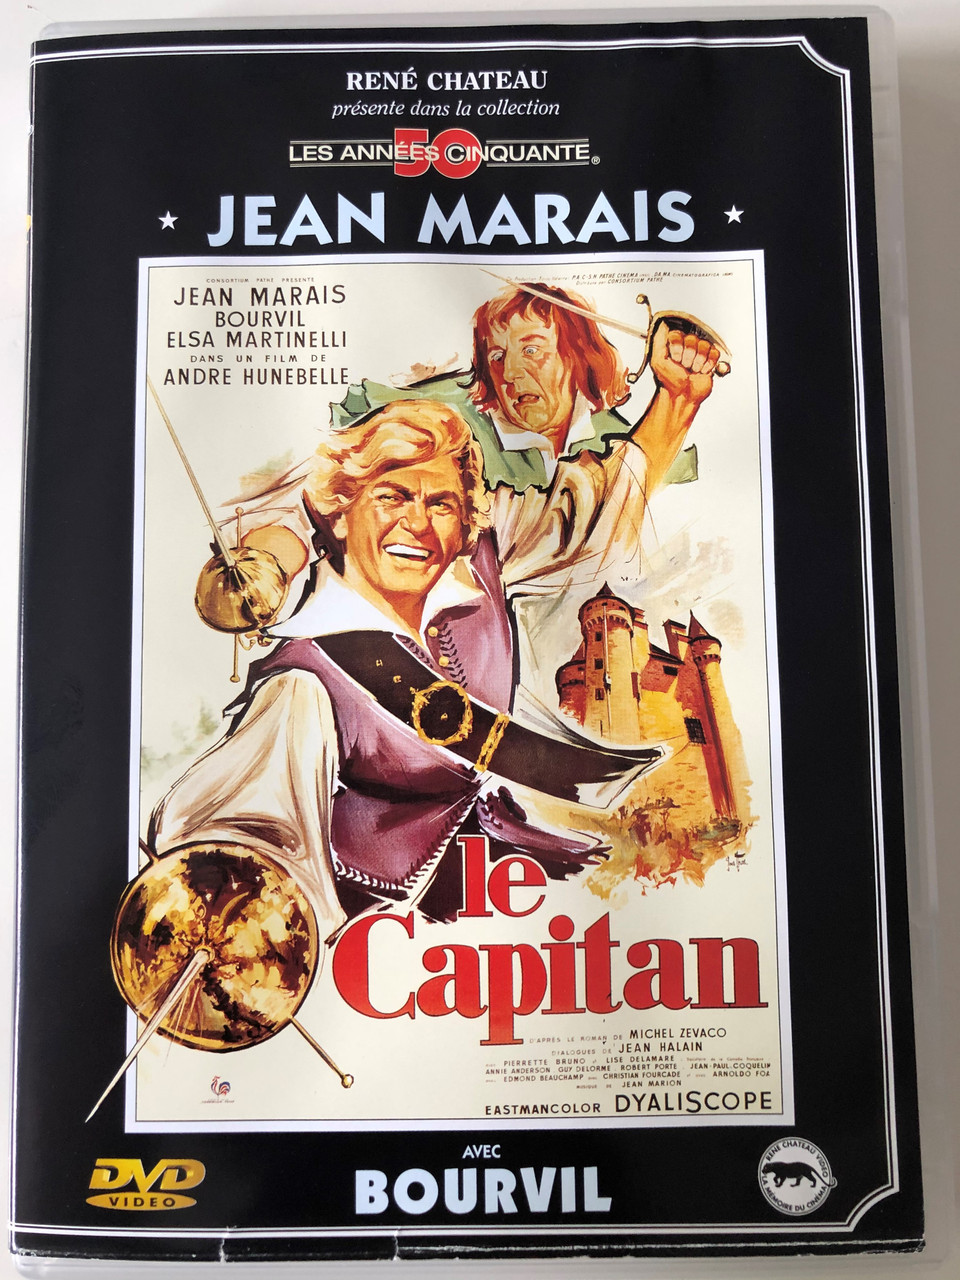 Le Capitan Dvd 1960 Captain Blood Directed By Andre Hunebelle Starring Jean Marais Bourvil Elsa Martinelli Lise Delamare Bibleinmylanguage